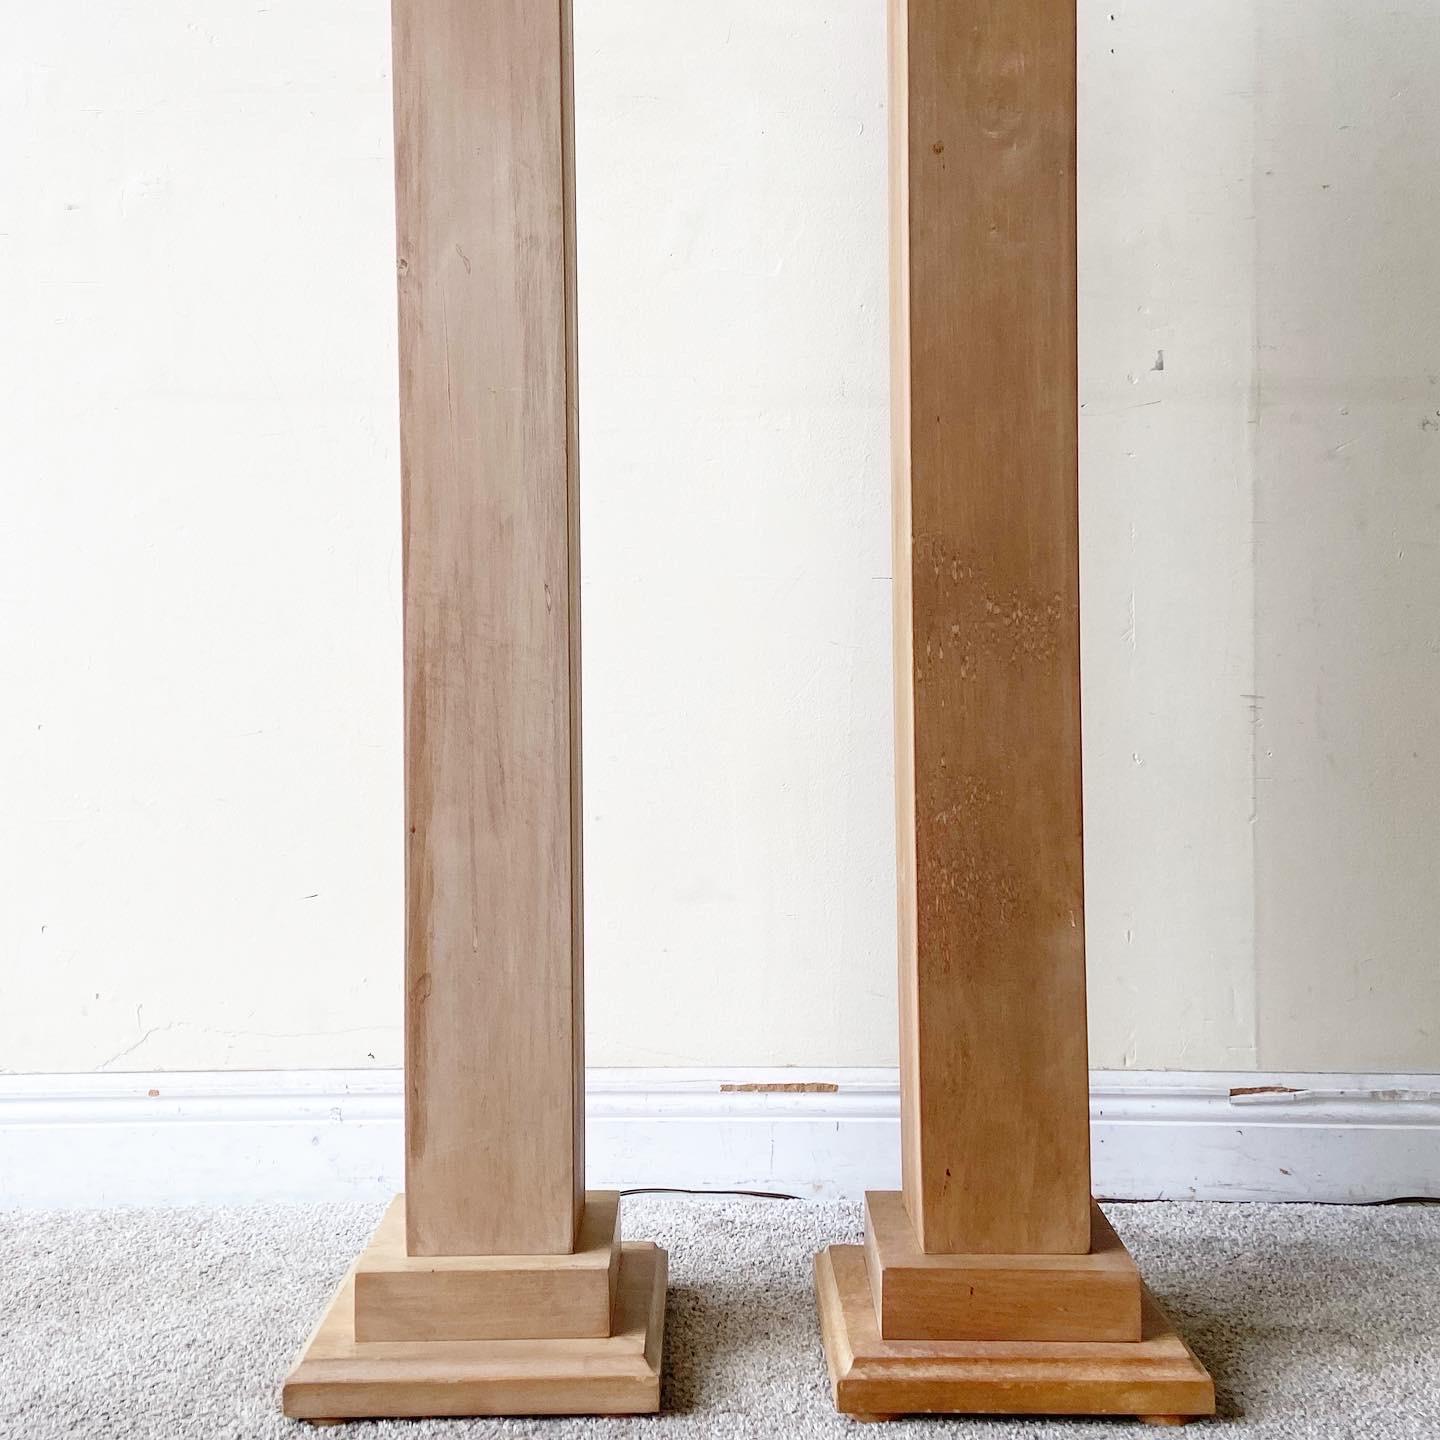 American Contemporary Organic Wooden Pillar Floor Lamps, Set of 2